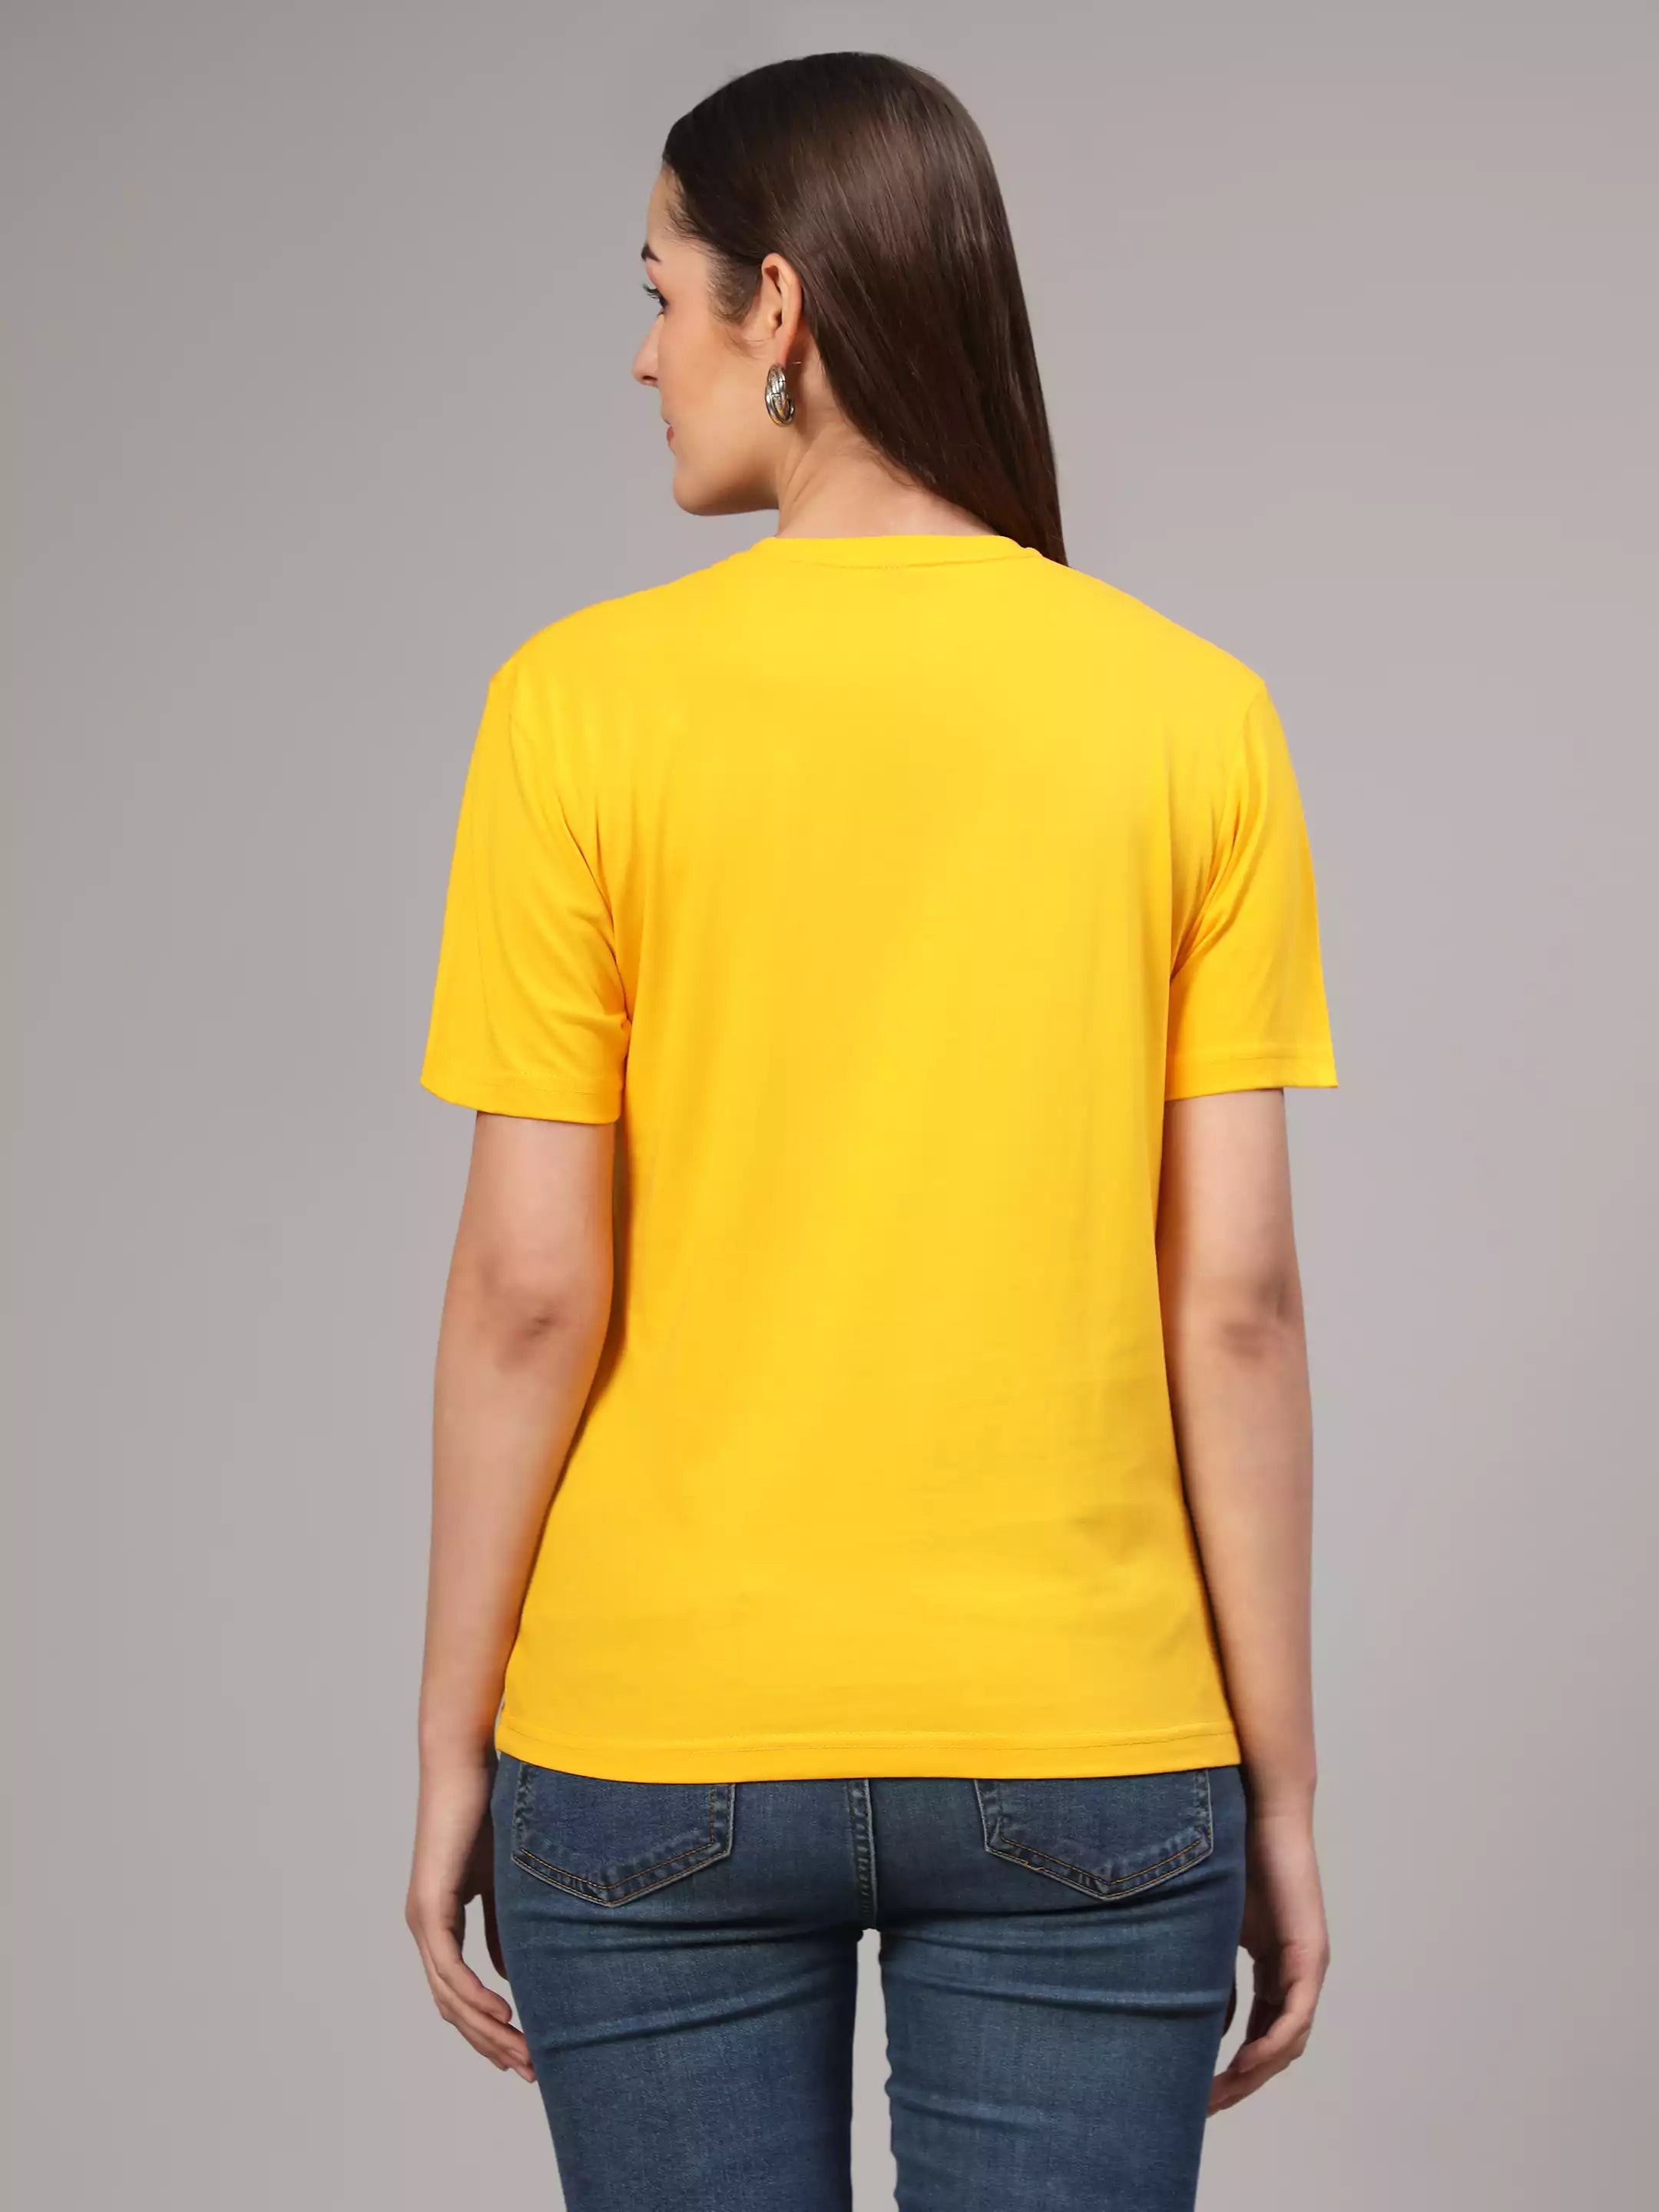 50 50  - Sukhiaatma Unisex Graphic Printed Yellow T-shirt